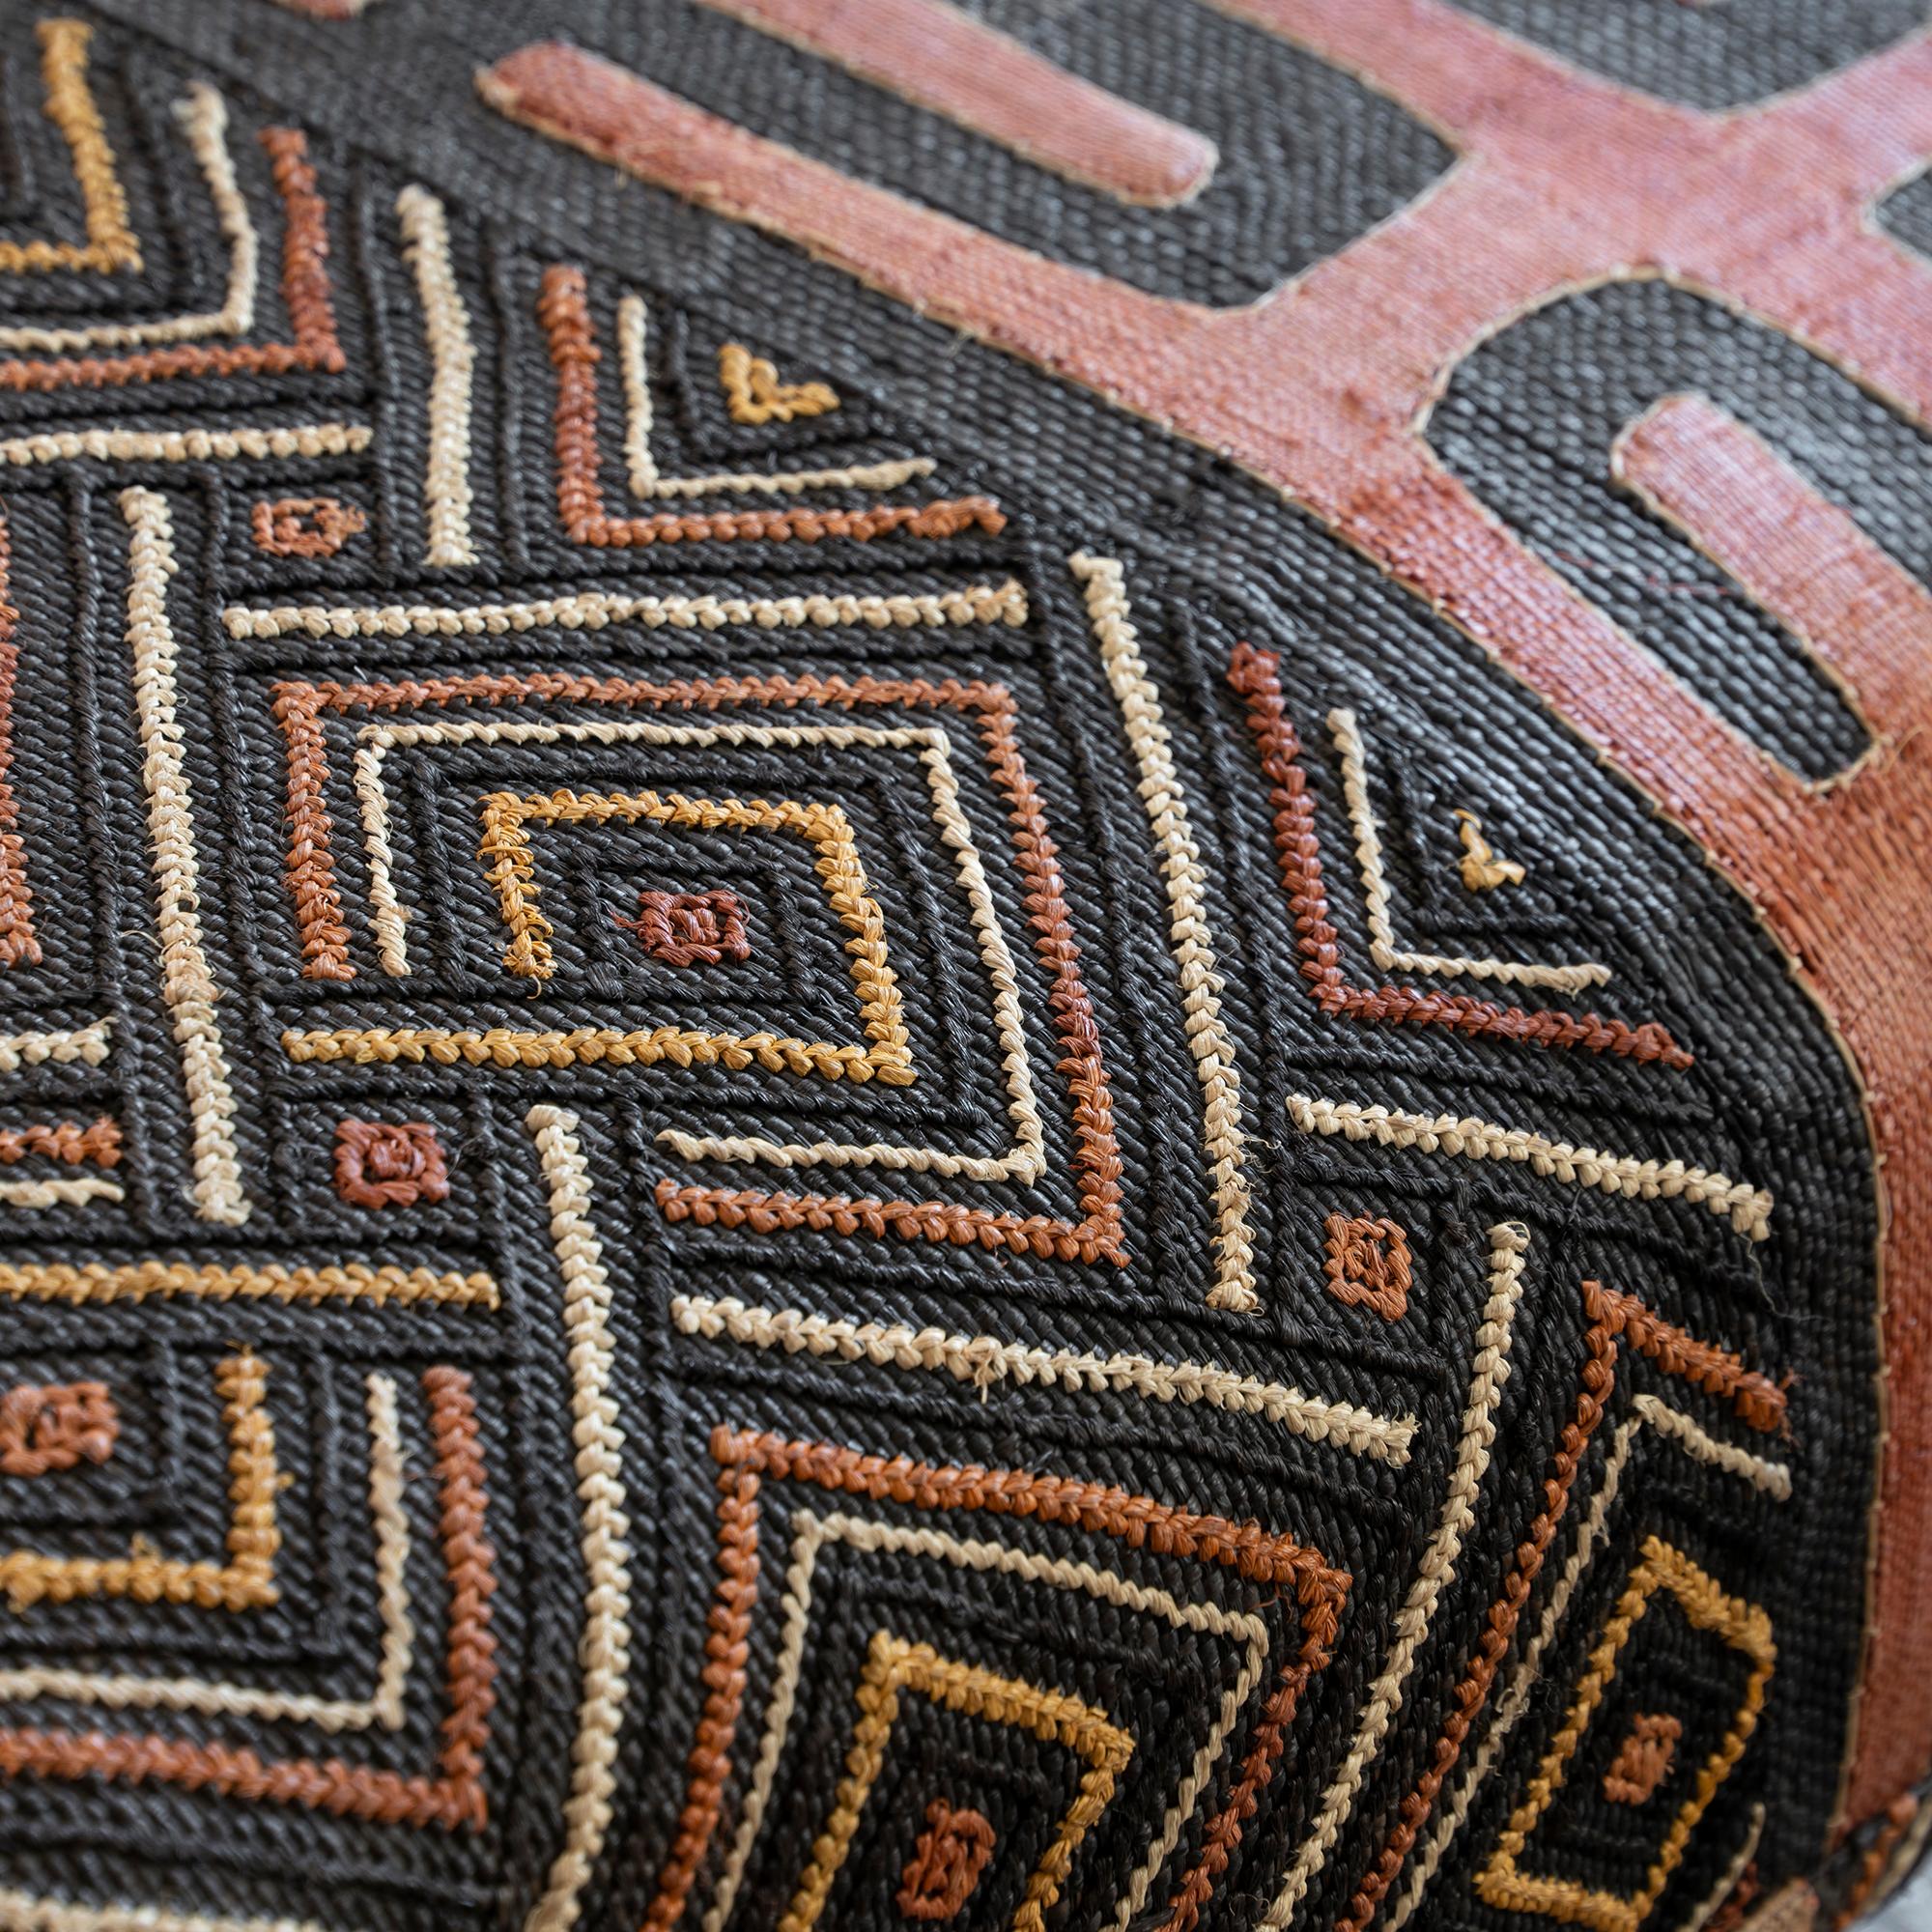 Late 19th Century Italian Walnut Stools African Woven Upholstery 6